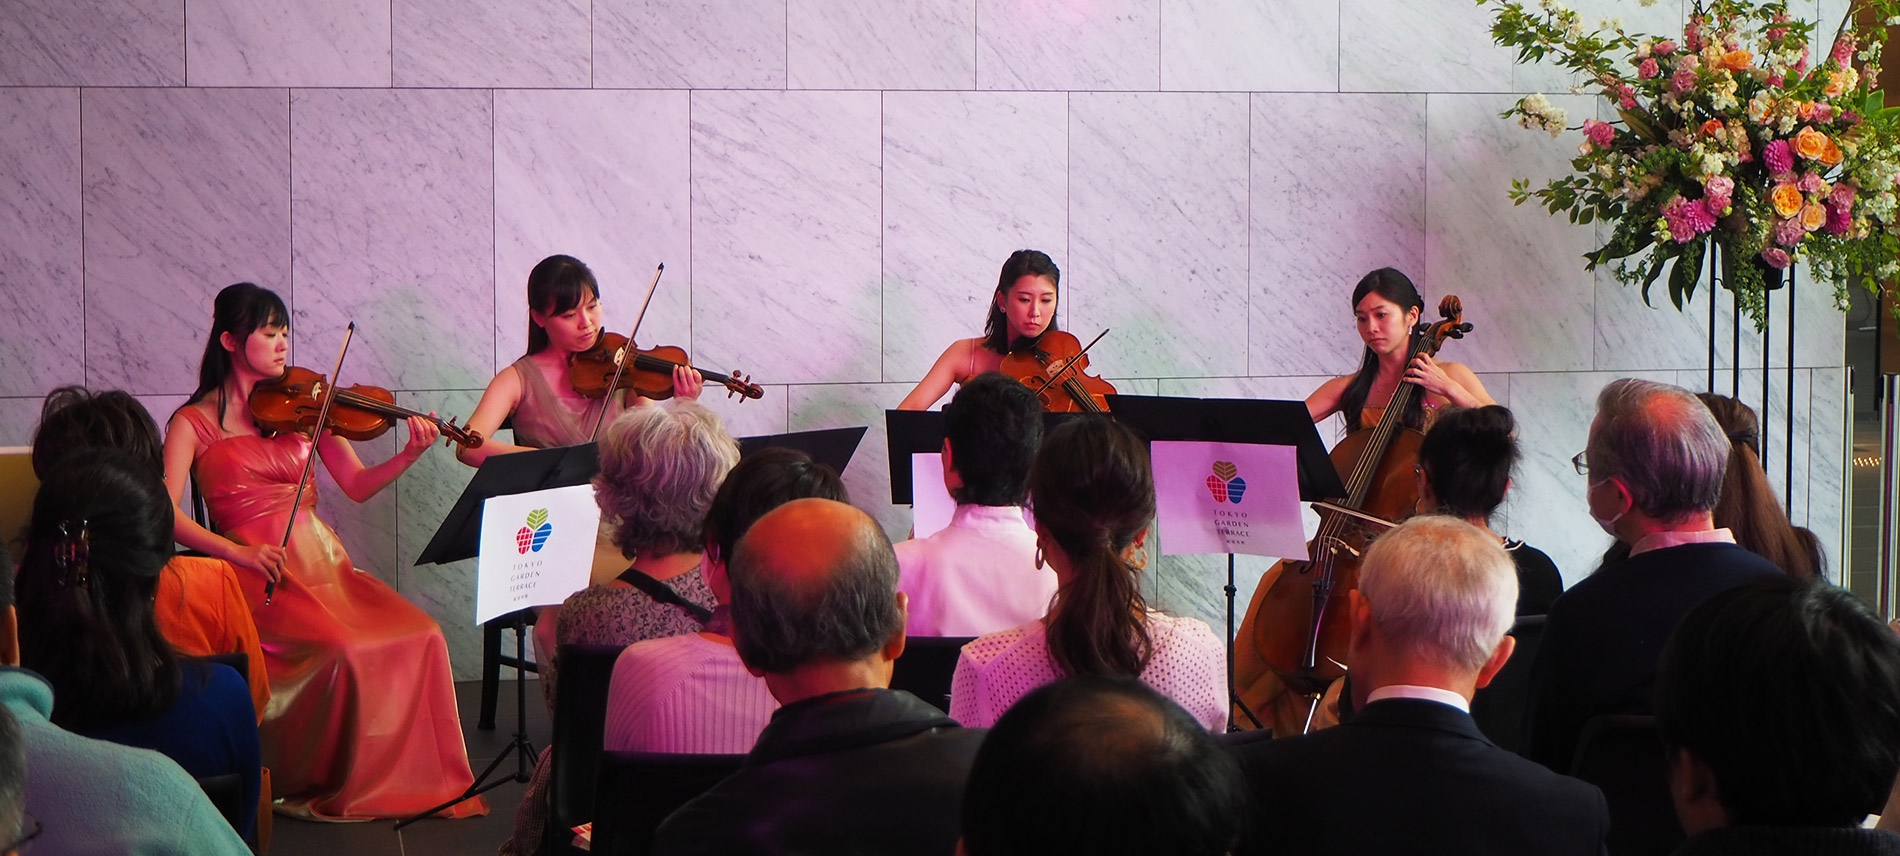 KIOI CONCERT 東京藝術大学卒業生によるコンサート 弦楽四重奏で楽しむ春のクラシック音楽